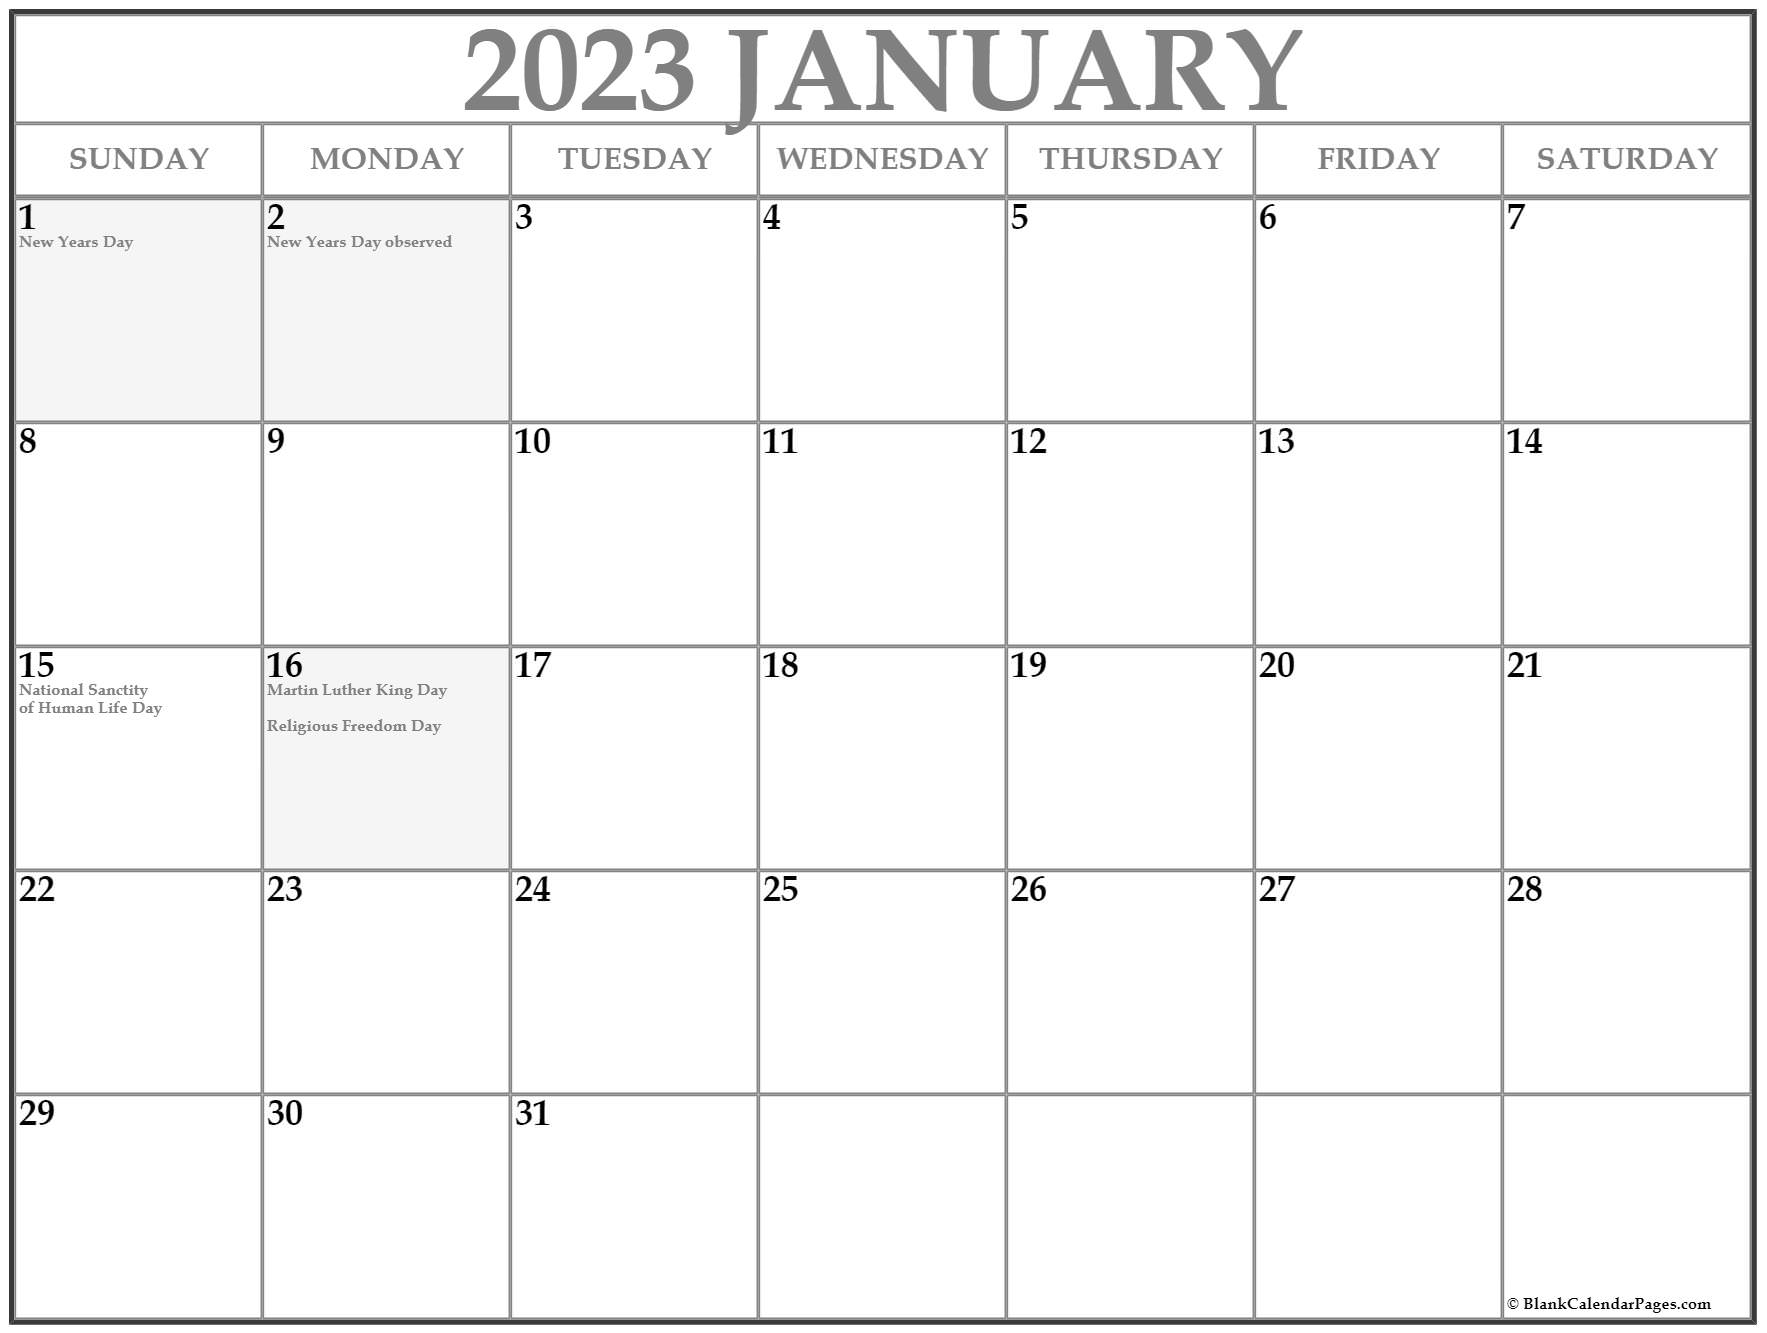 free-blank-calendar-2023-with-holidays-printable-2022